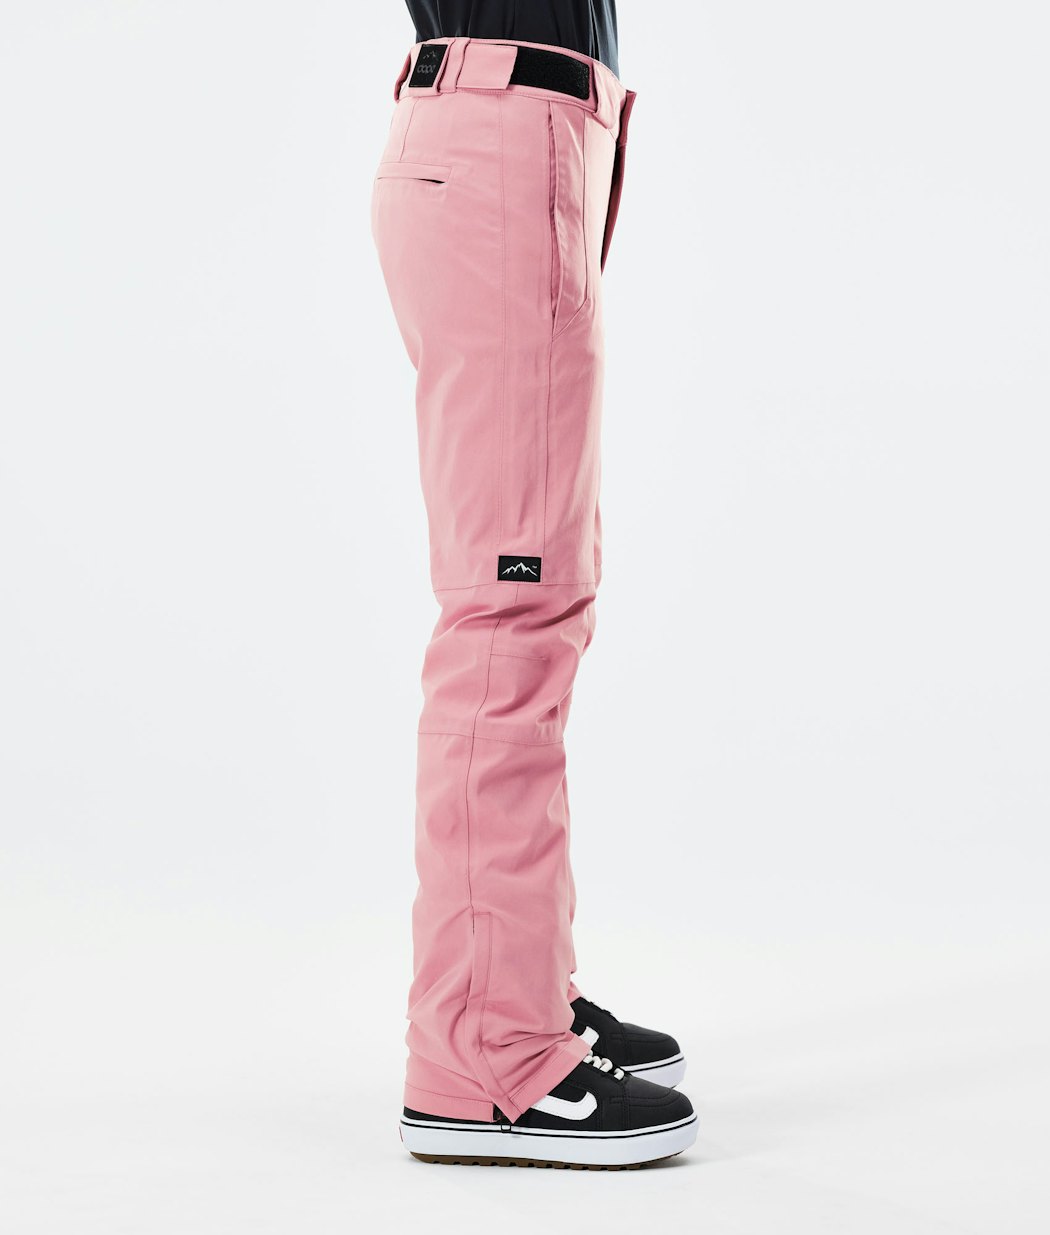 Dope Con W 2020 Women's Snowboard Pants Pink